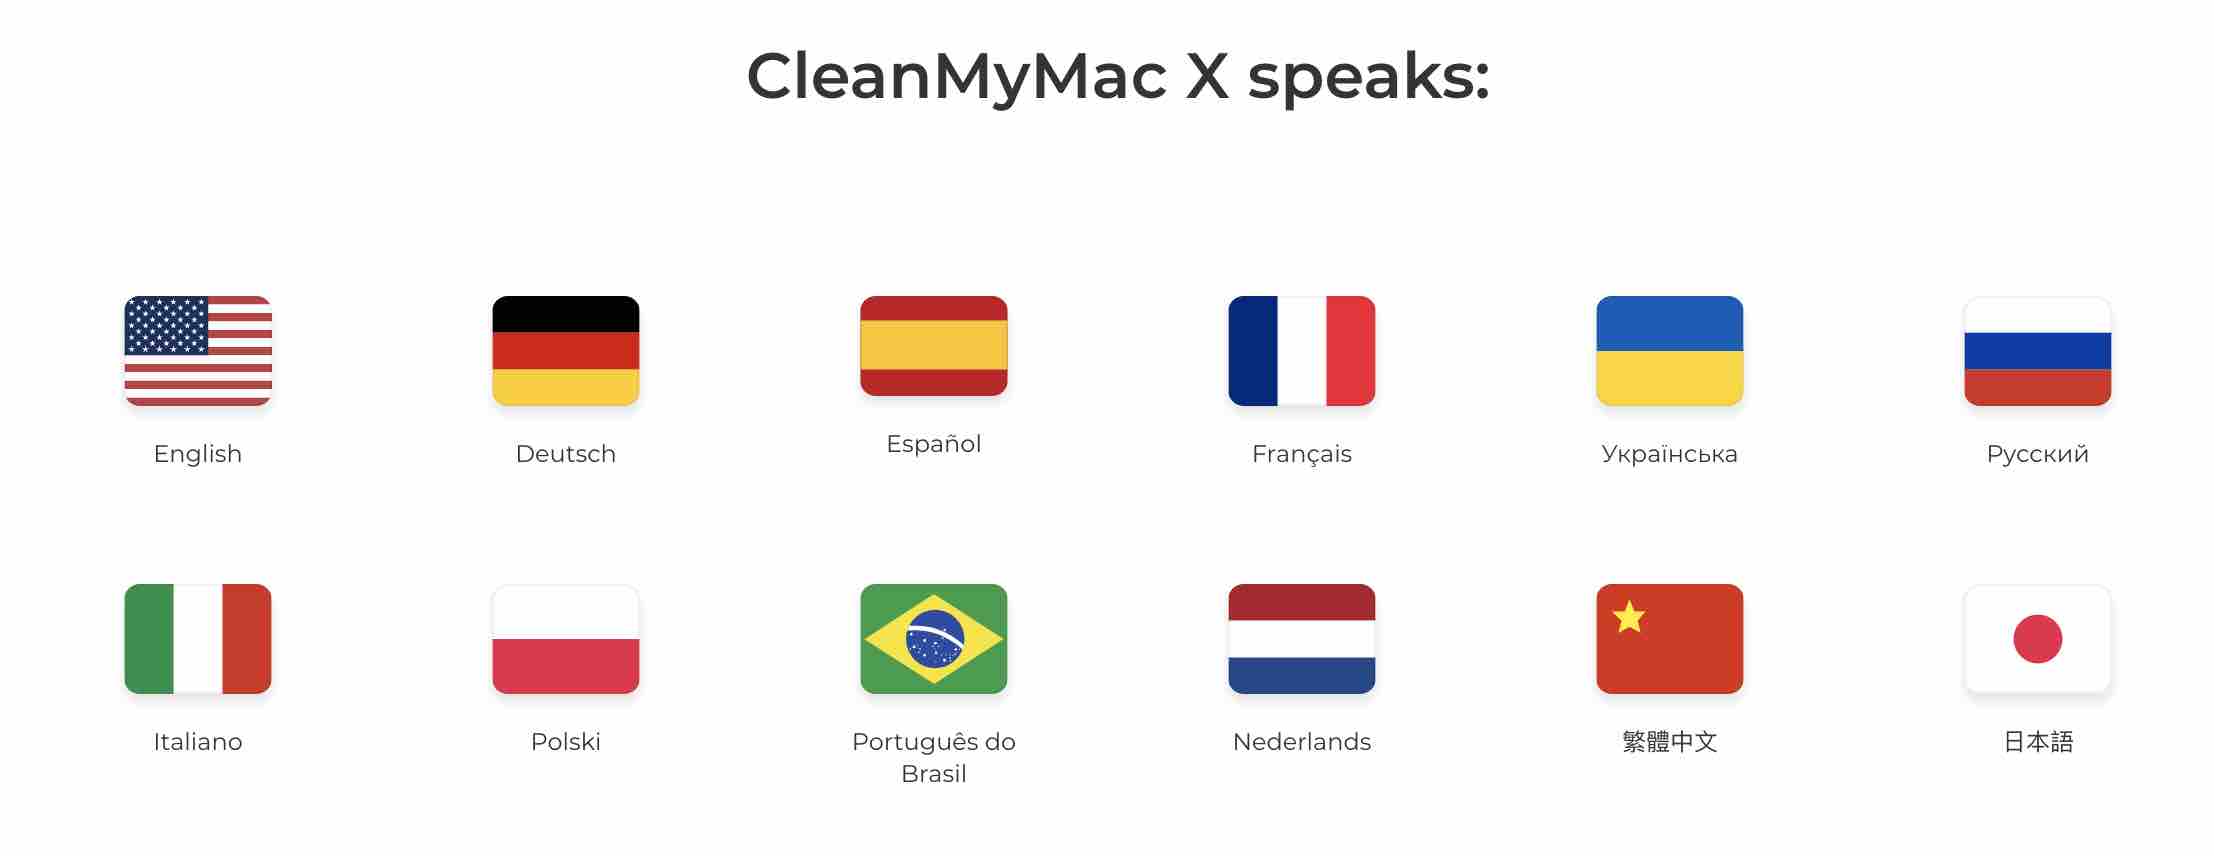 cleanmymac x speaks